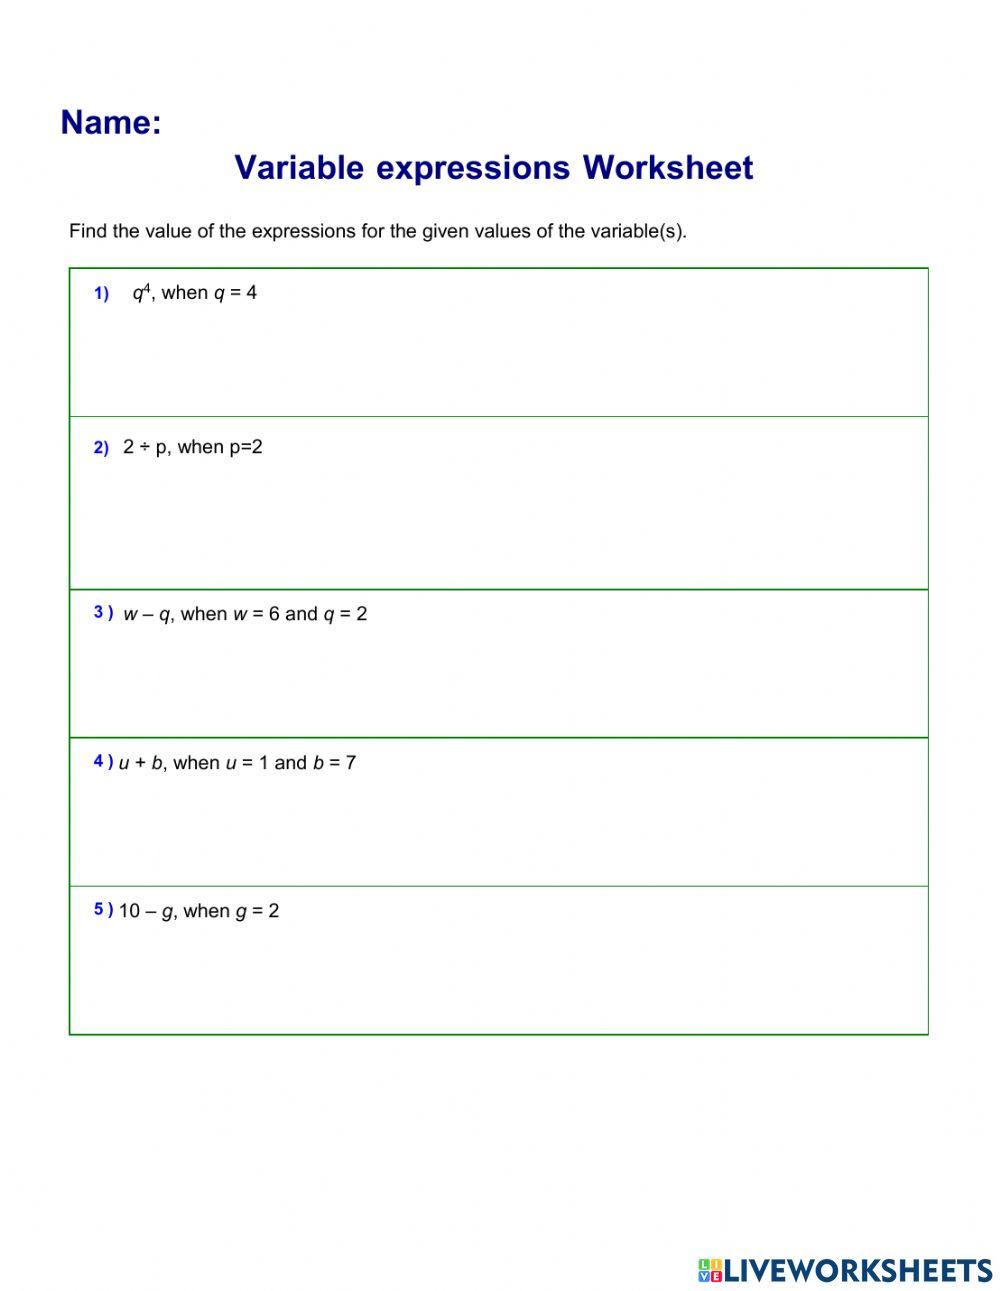 Evaluate Algebraic Expressions